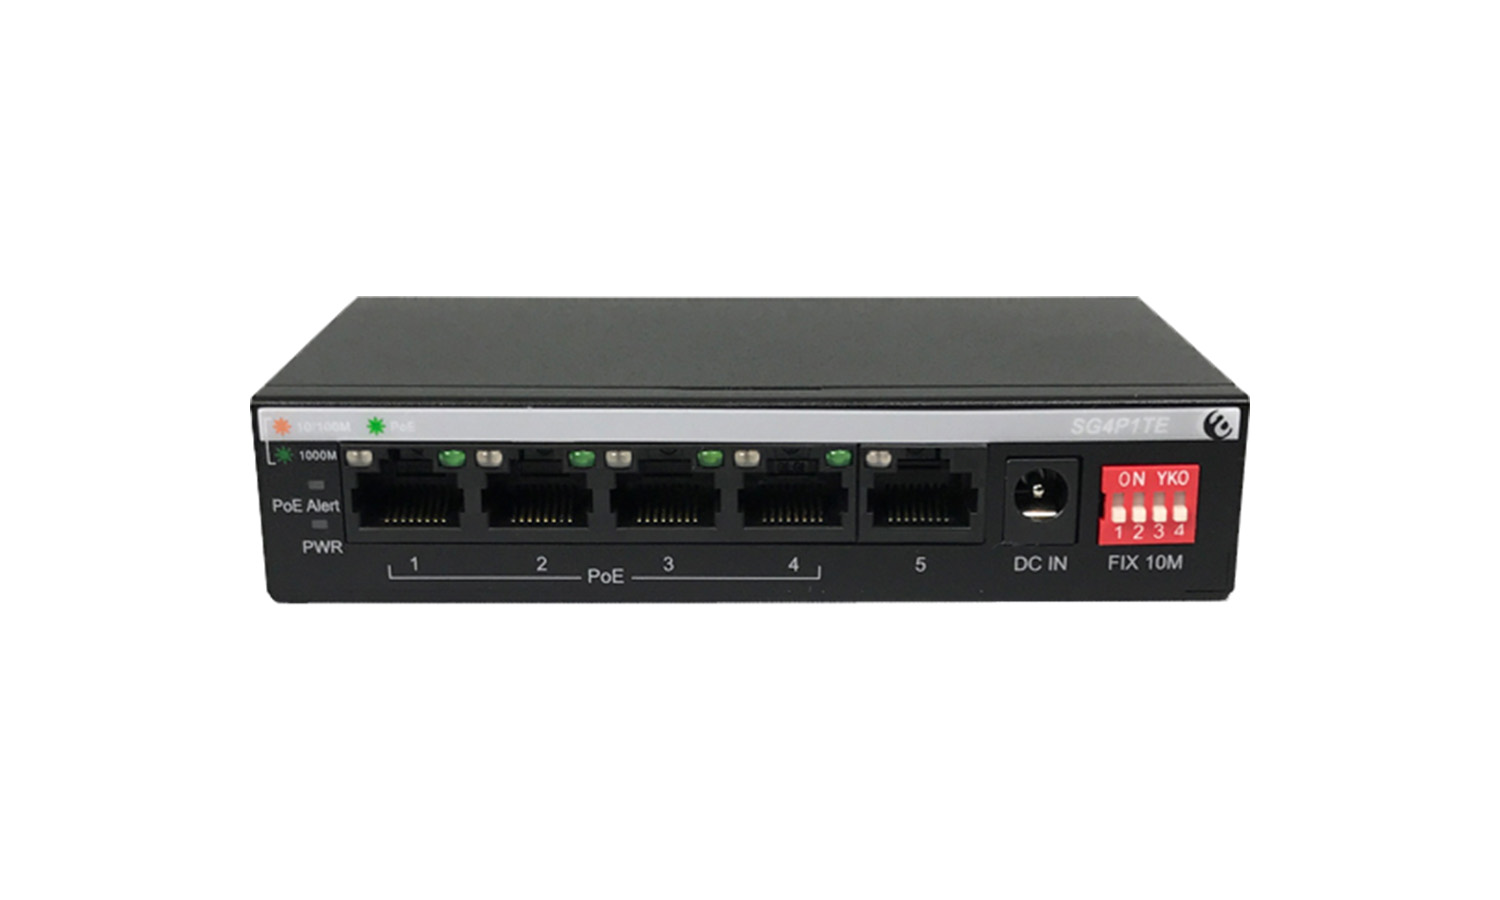 BZBGEAR BG-4P1TE 5 port 10/100/1000 Mbps Gigabit Ethernet switch